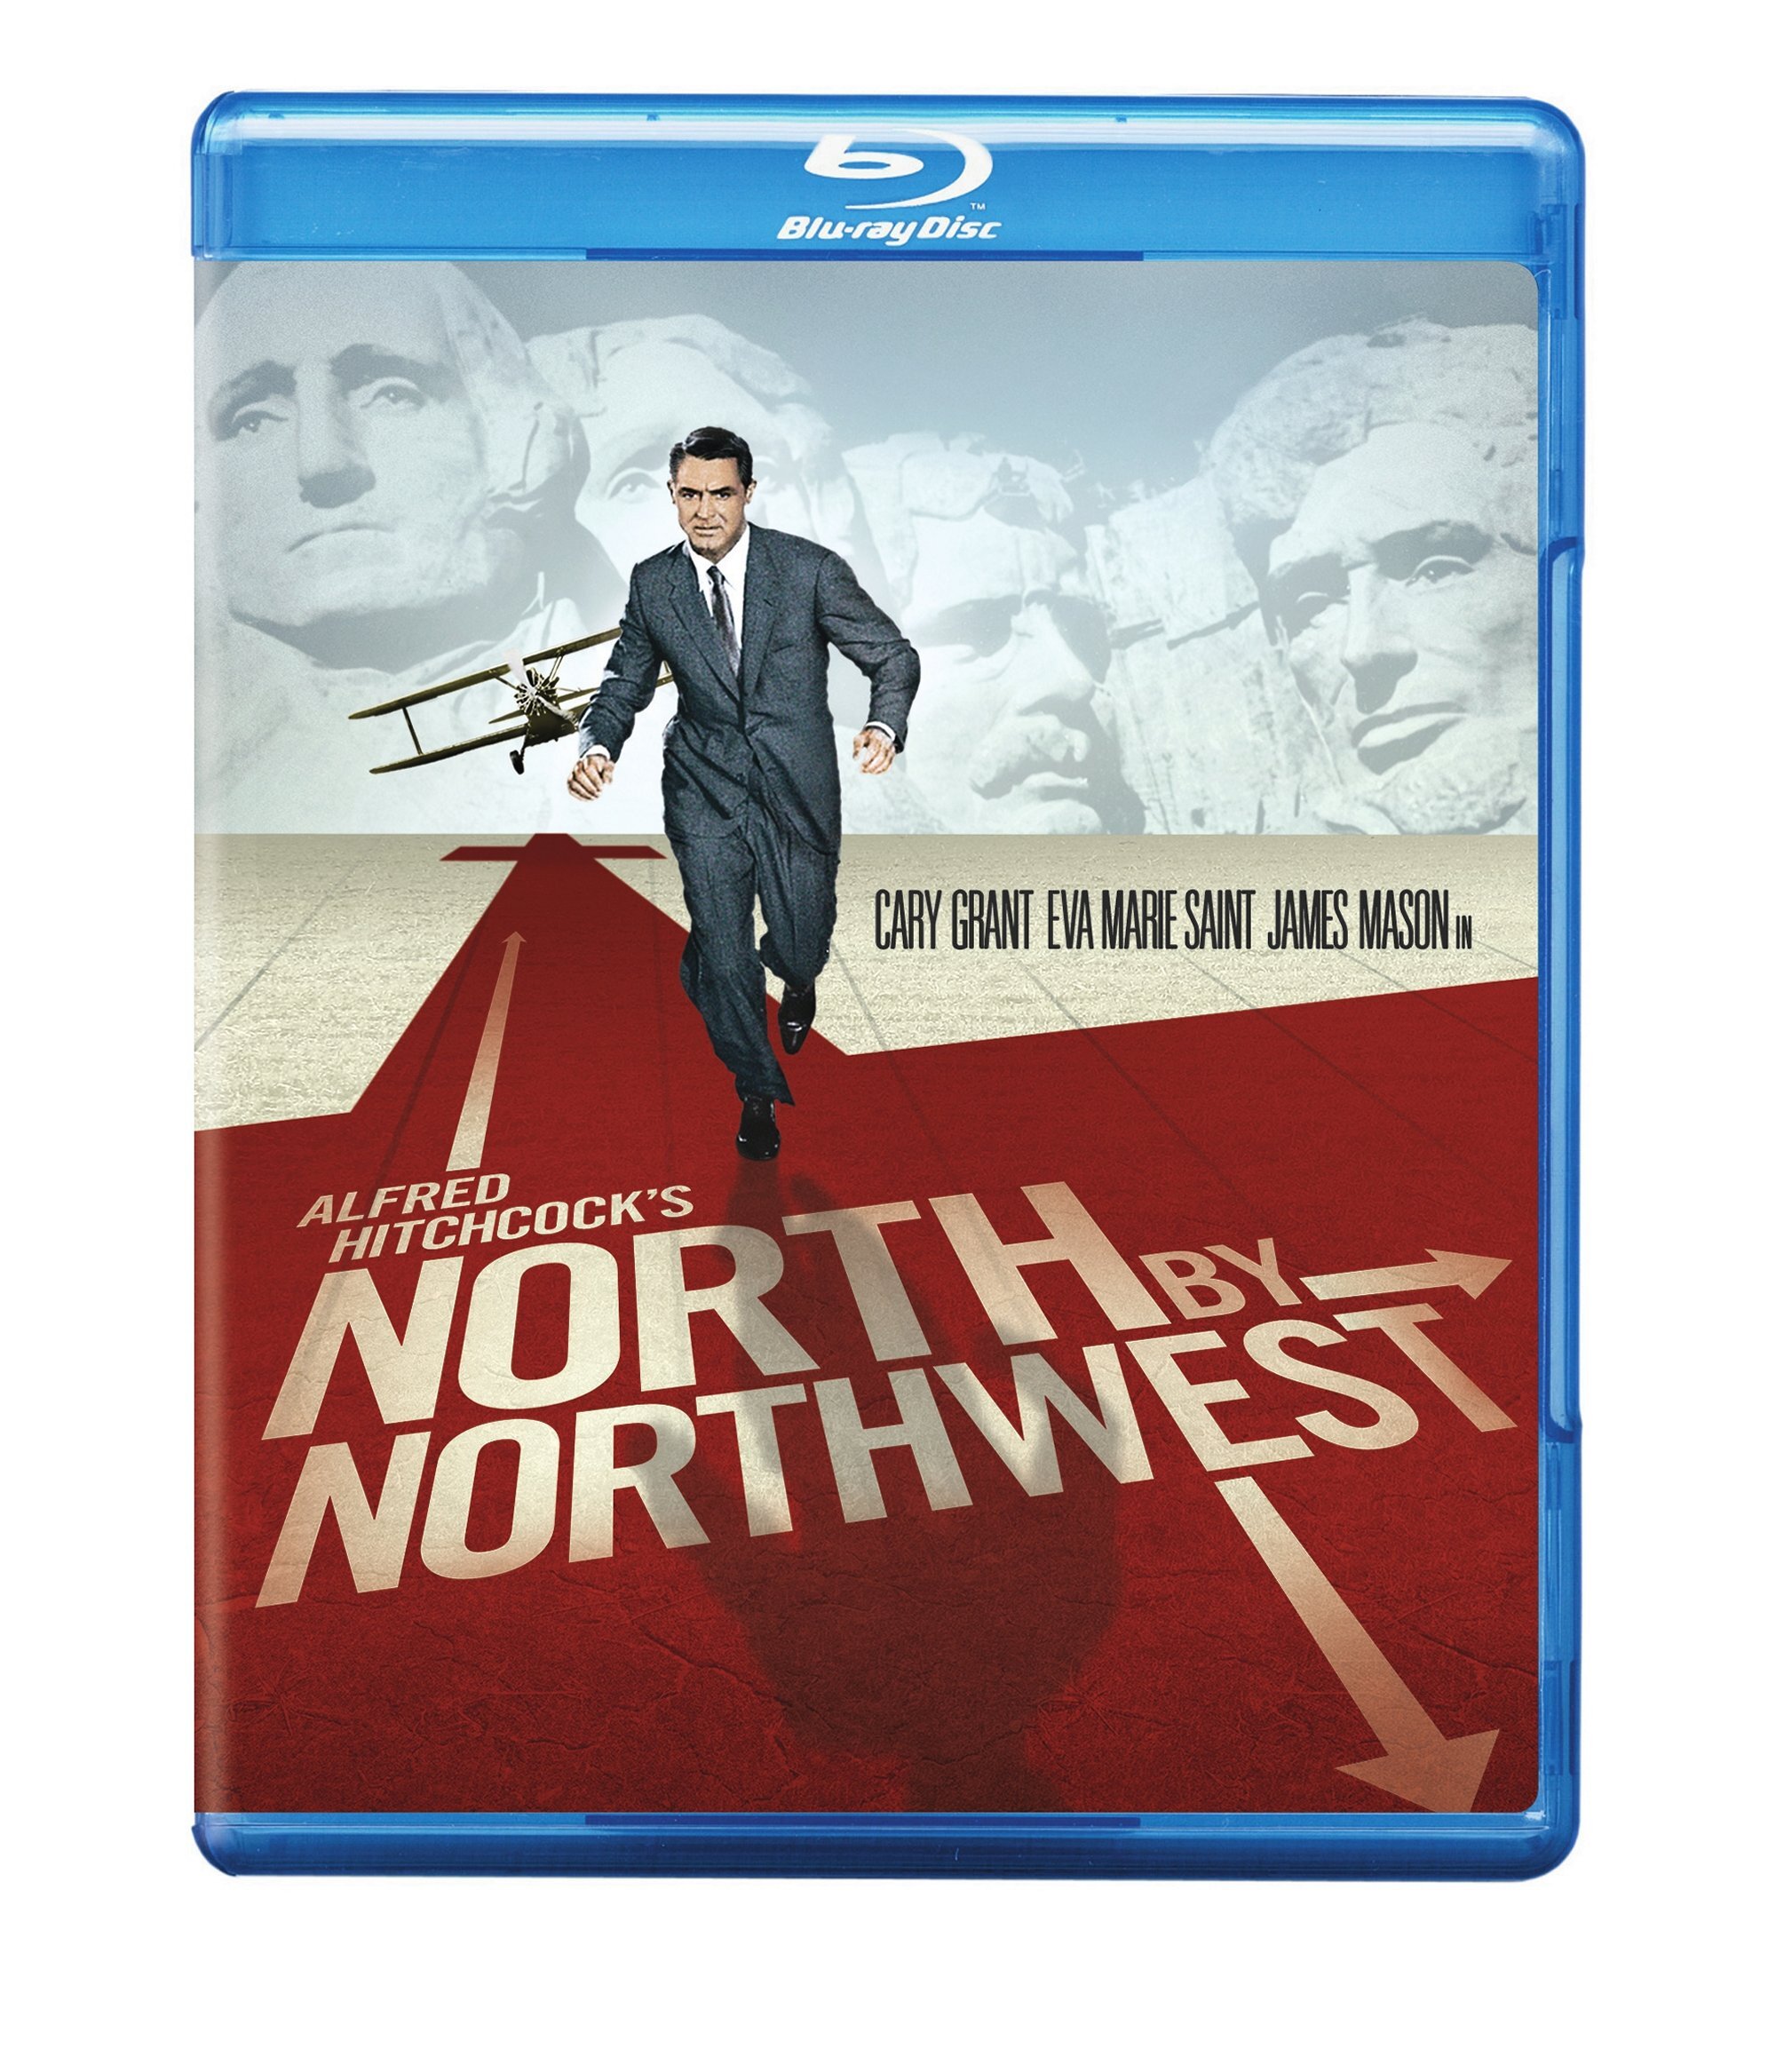 North By Northwest - Blu-ray [ 1959 ]  - Modern Classic Movies On Blu-ray - Movies On GRUV